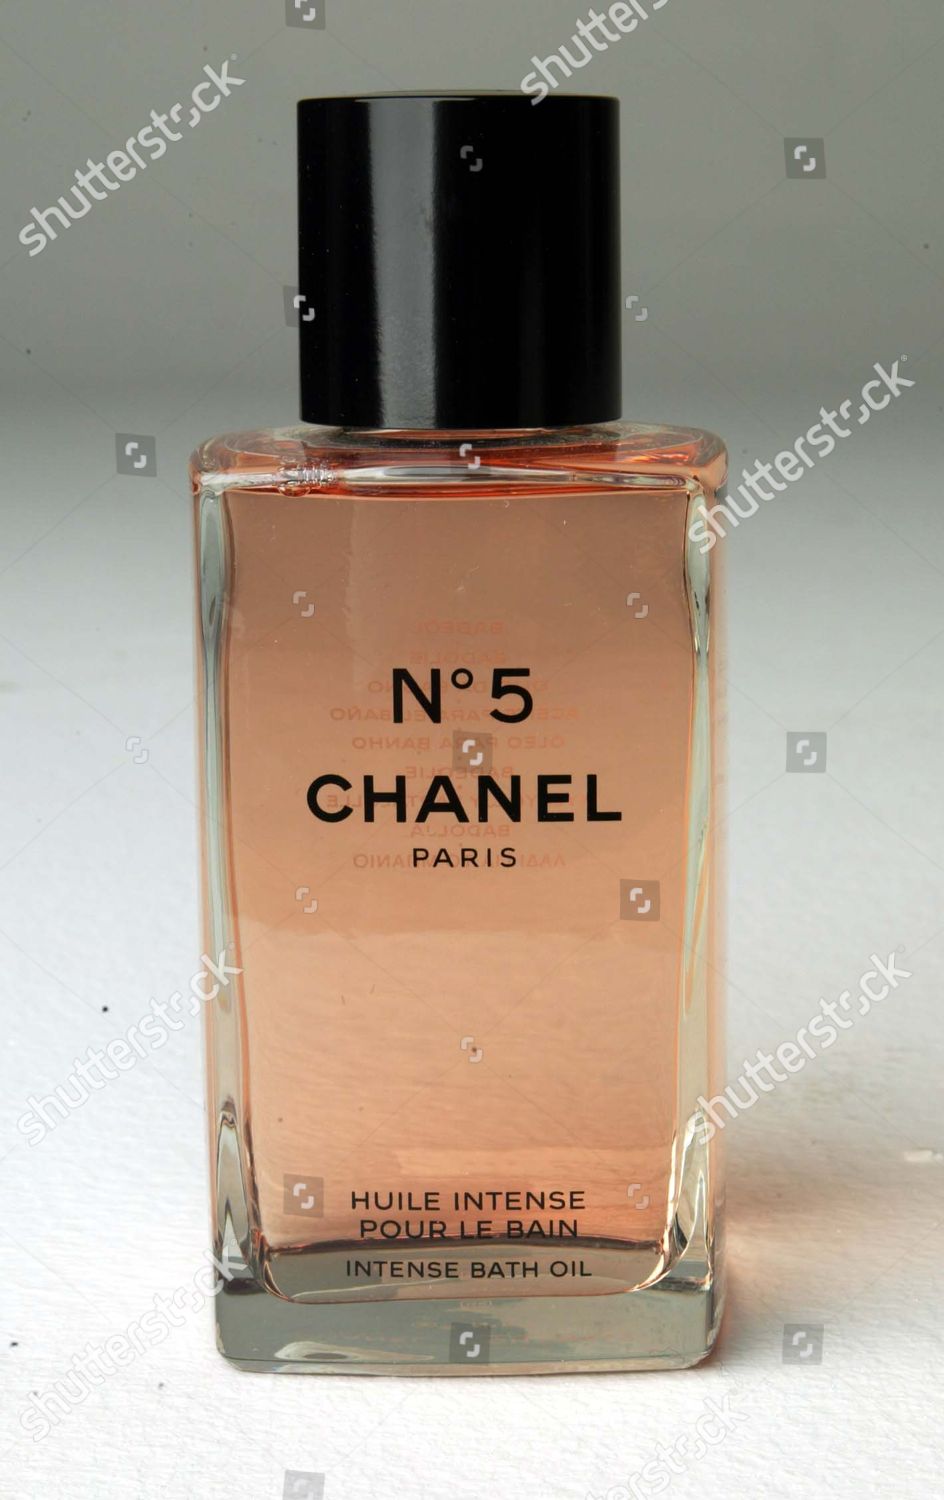 Needful things : Chanel No.5 Intense bath oil